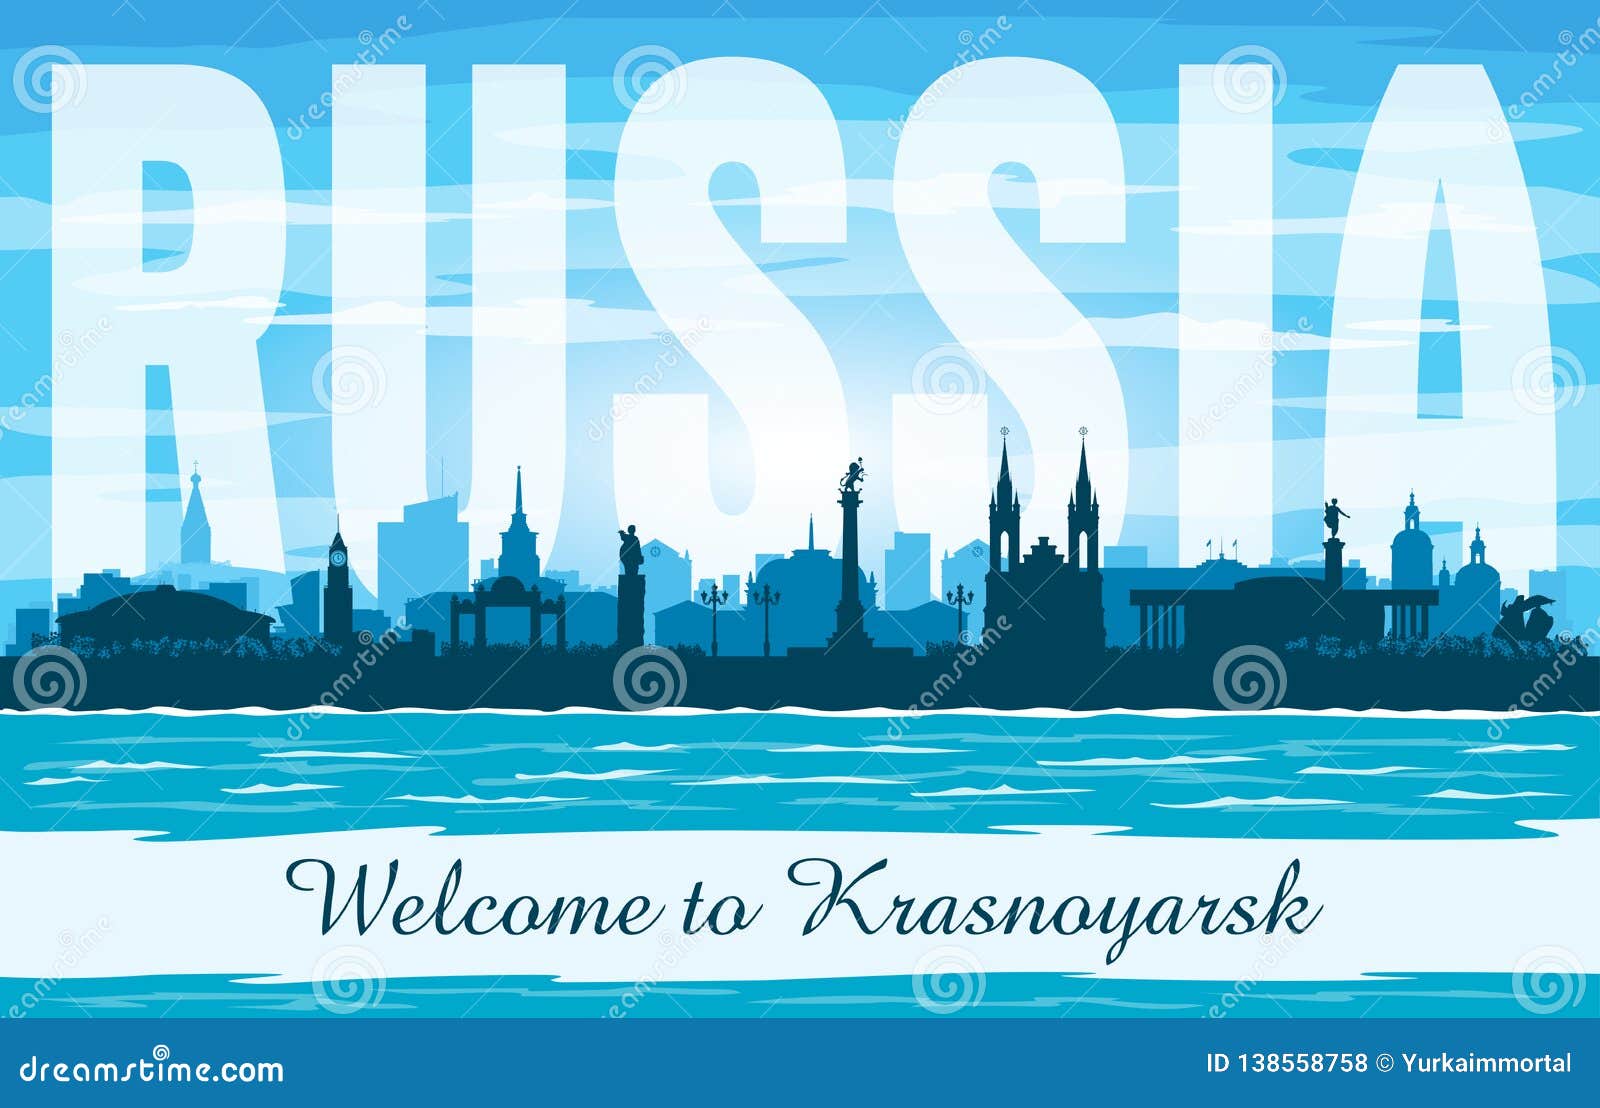 Krasnoyarsk Russia City Skyline Vector Silhouette | CartoonDealer.com